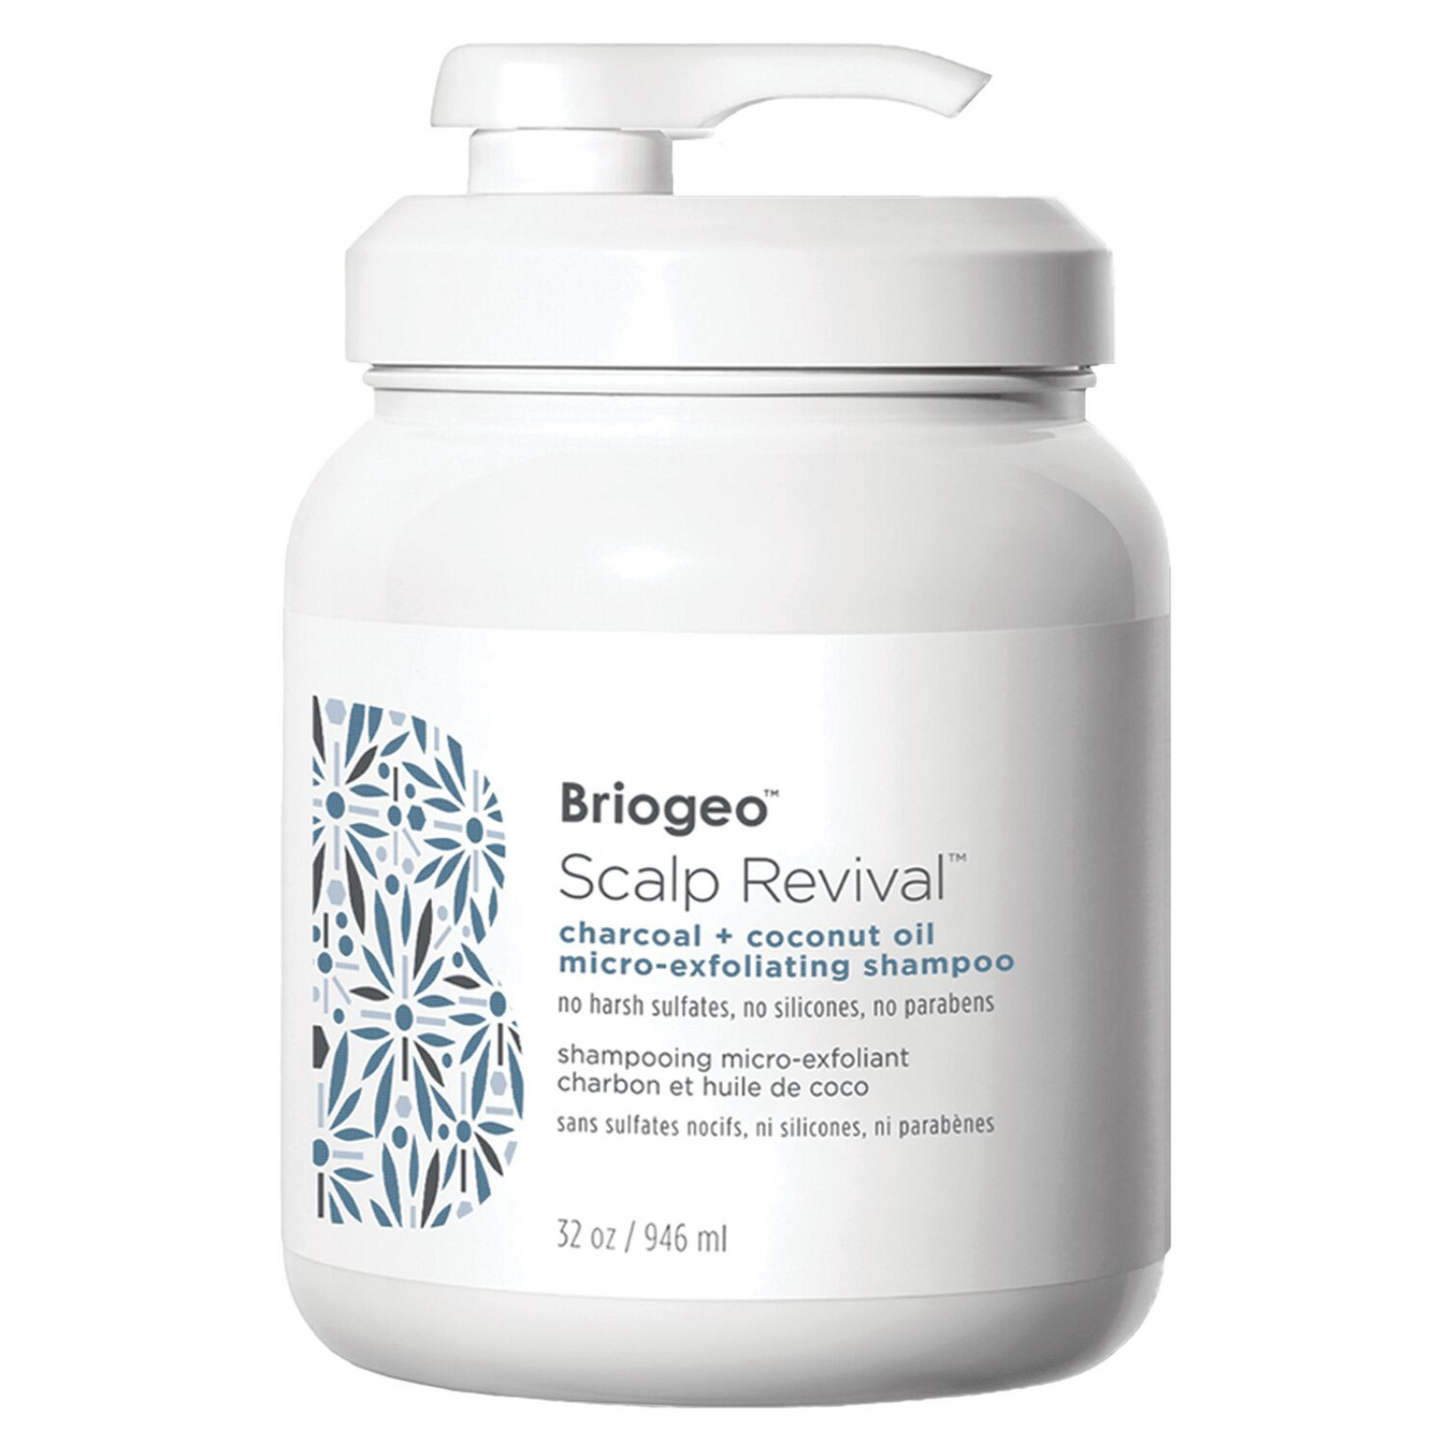 Briogeo - Scalp Revival Charcoal + Coconut Oil Micro-Exfoliating Shampoo